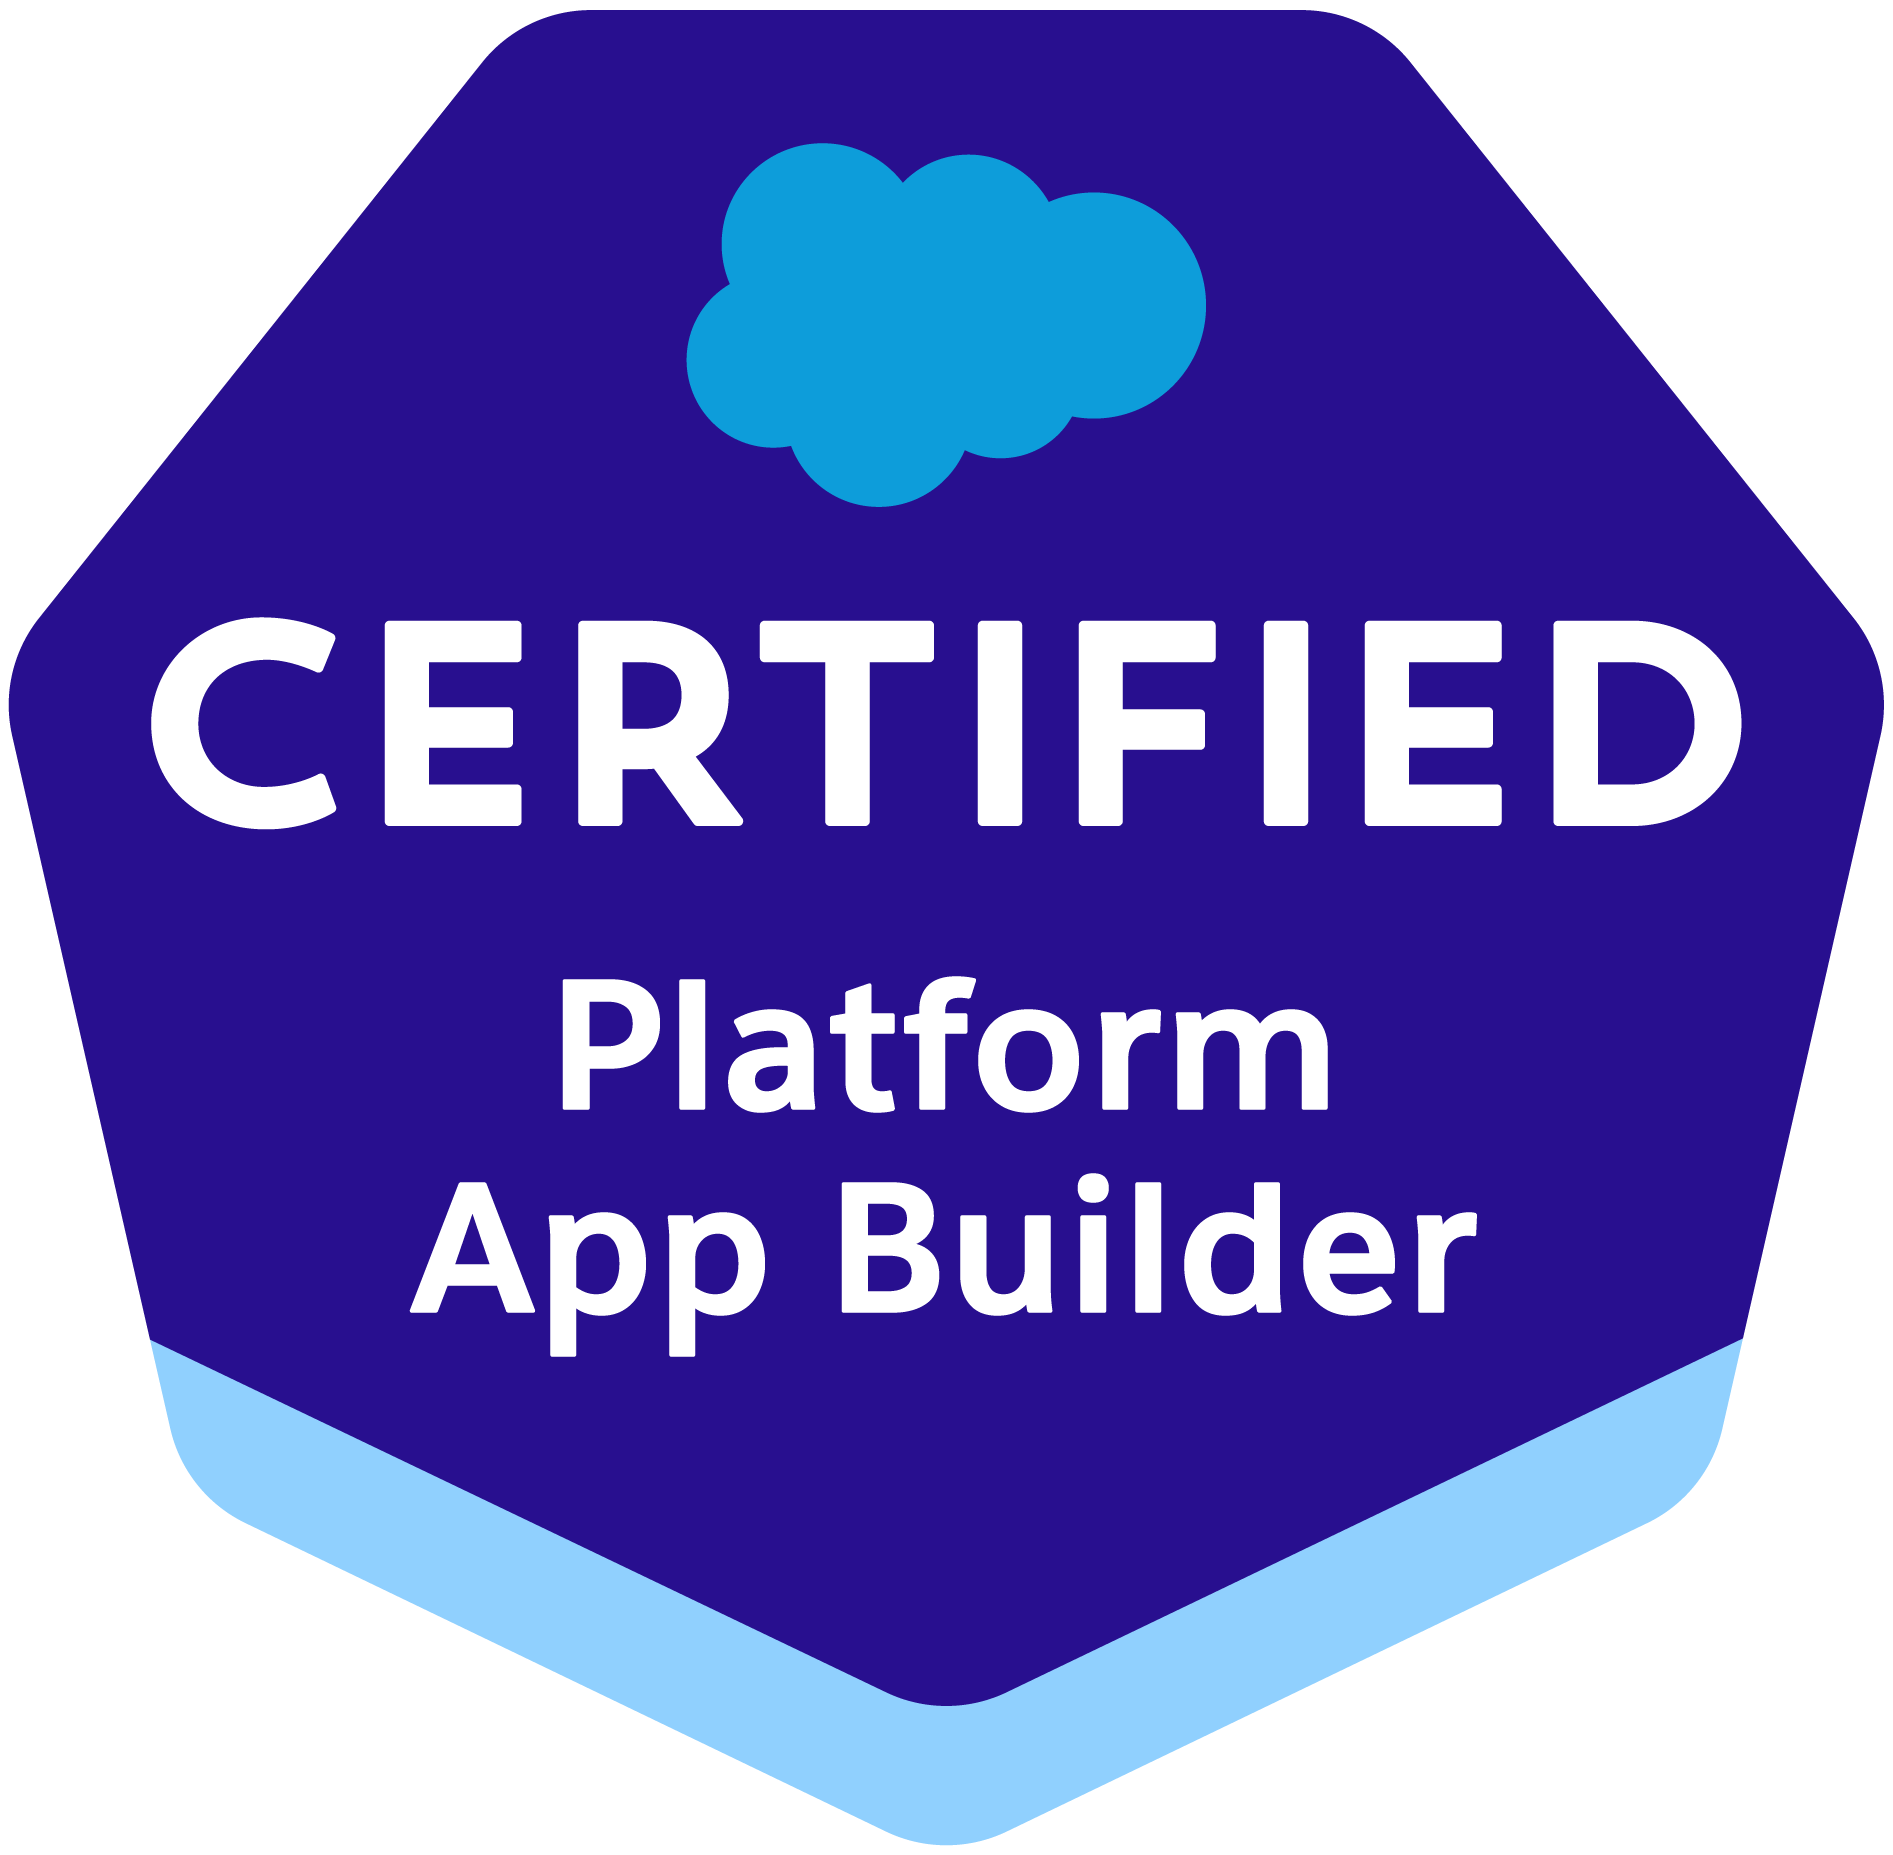 Associate Platform App Builder